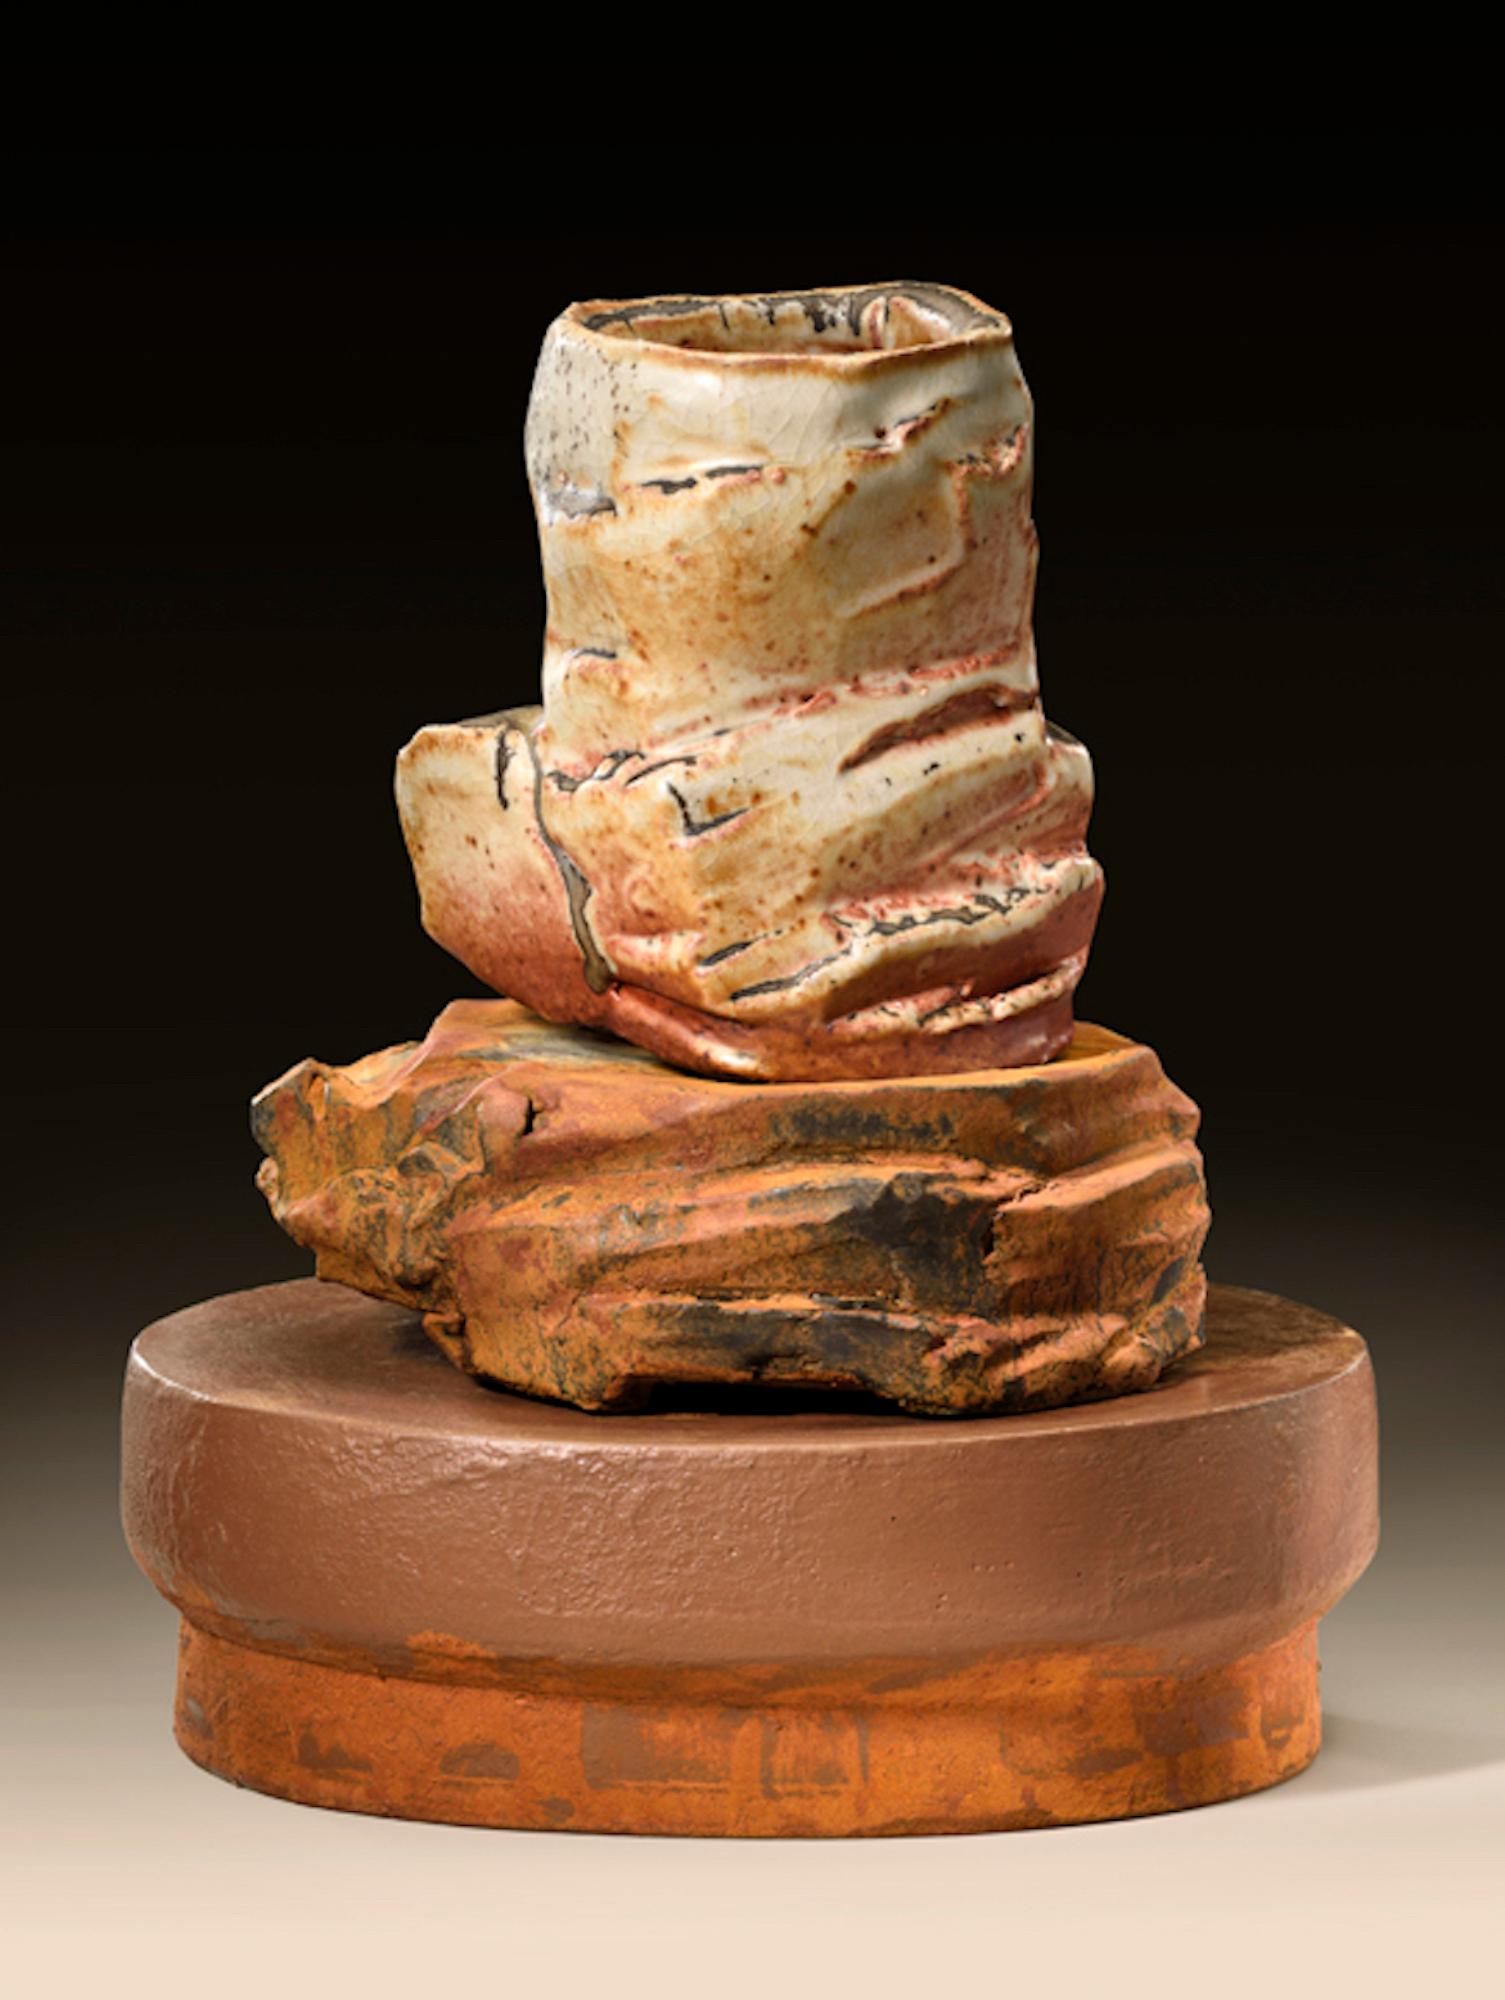 Contemporary Richard Hirsch Ceramic Scholar Rock Cup Sculpture #19, 2016 For Sale